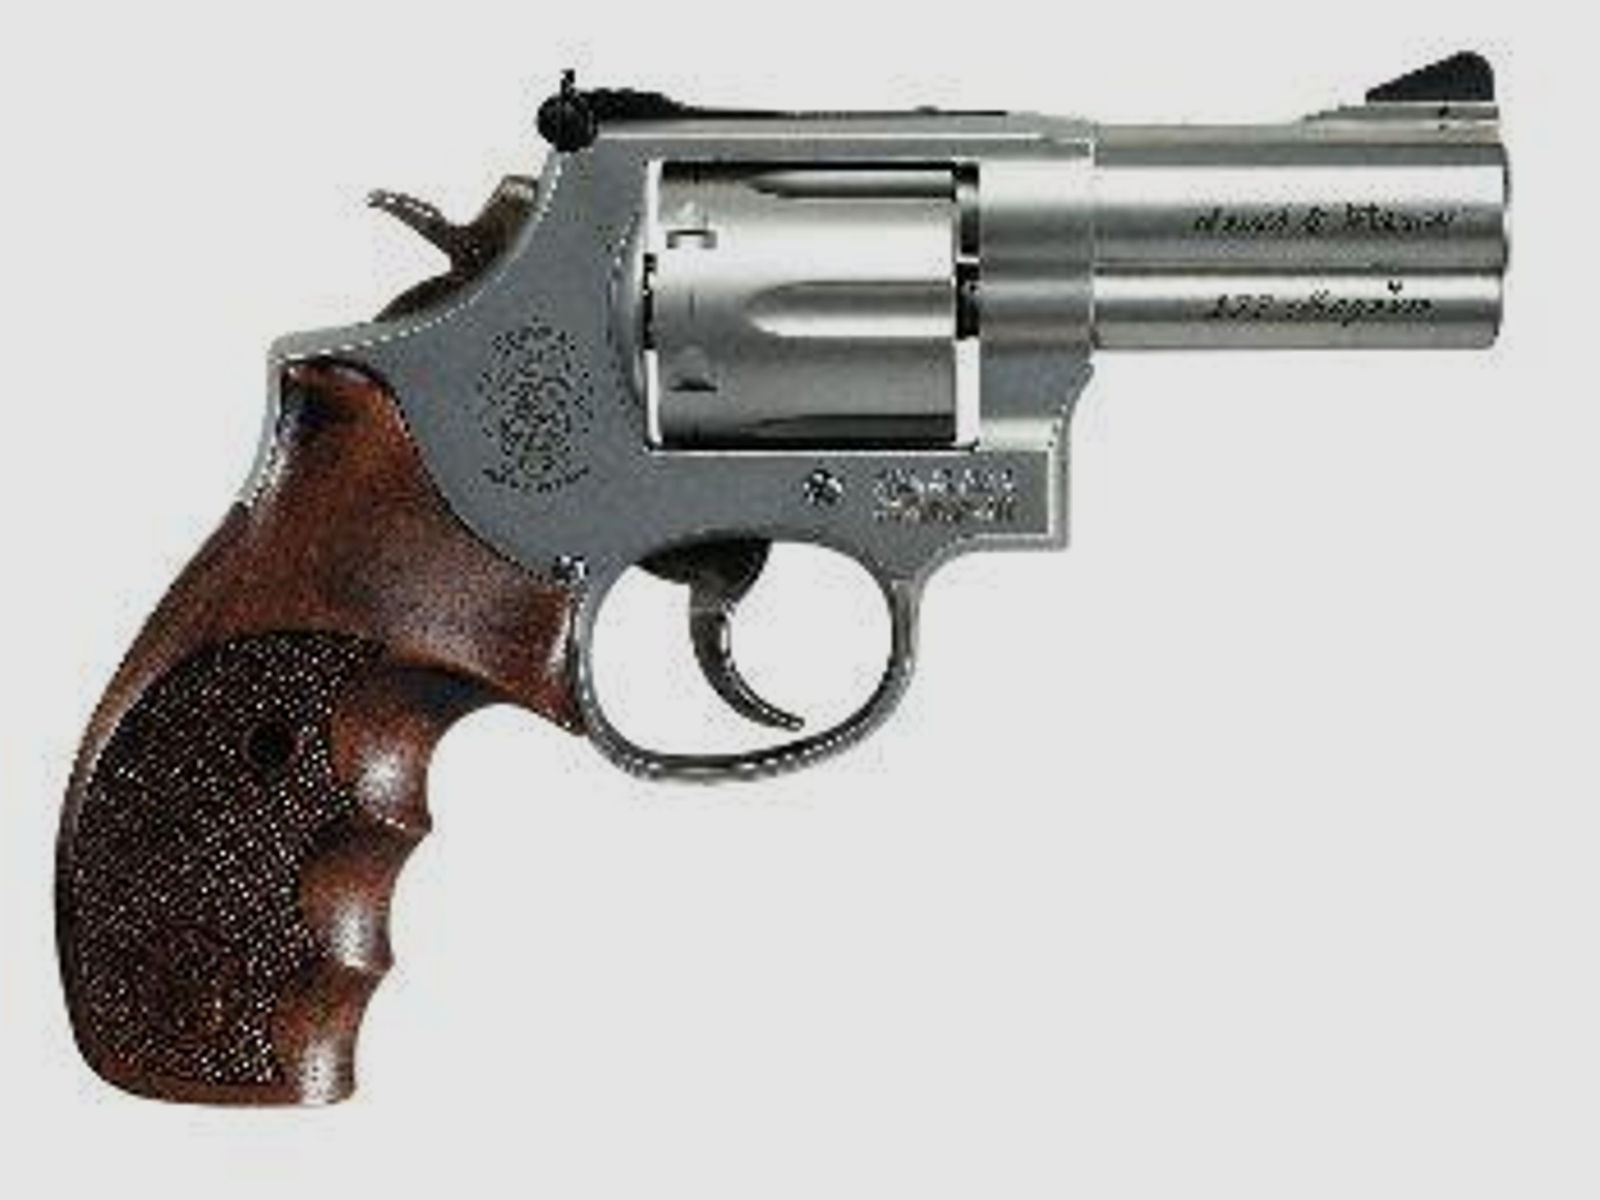 SMITH & WESSON Revolver Mod. 686 -3' Security Special .357Mag